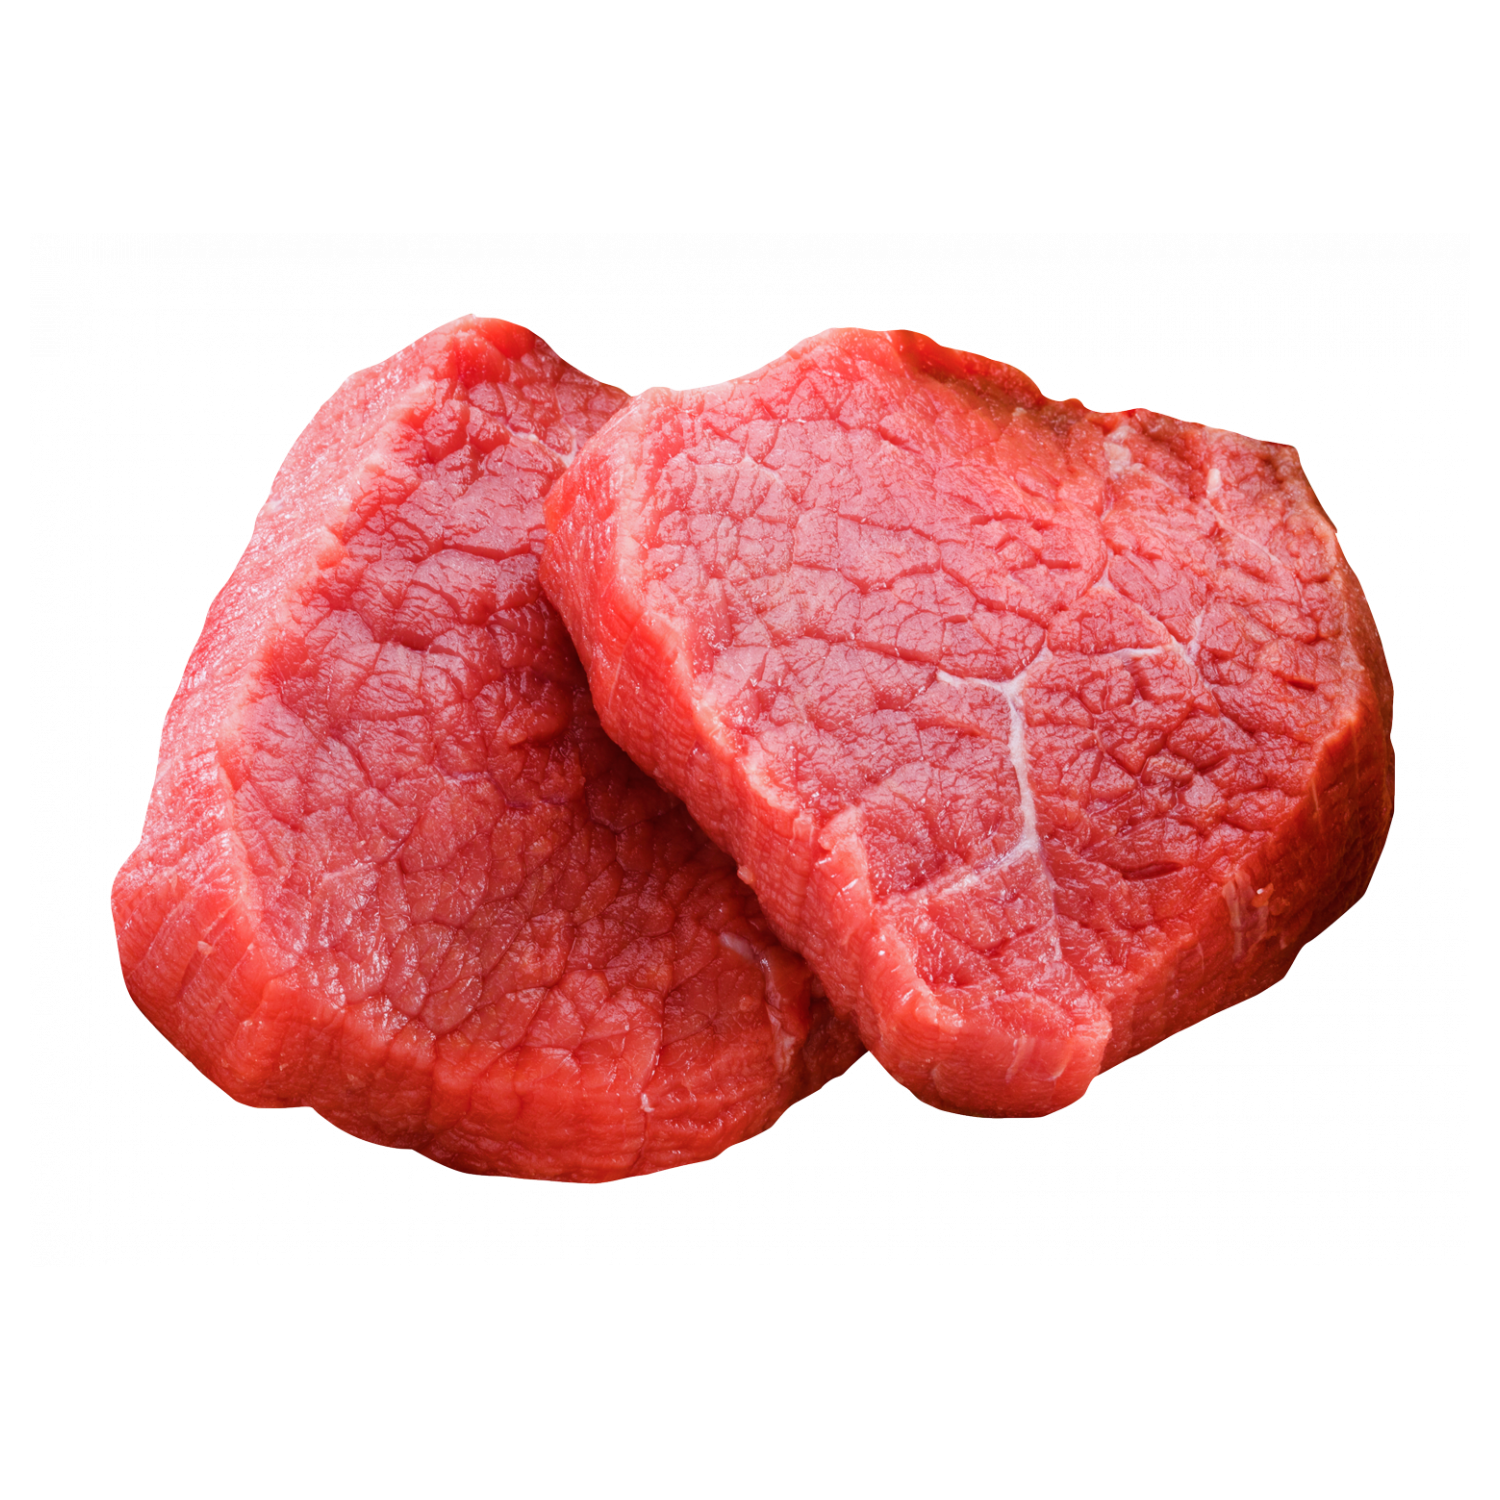 Beef Transparent Image